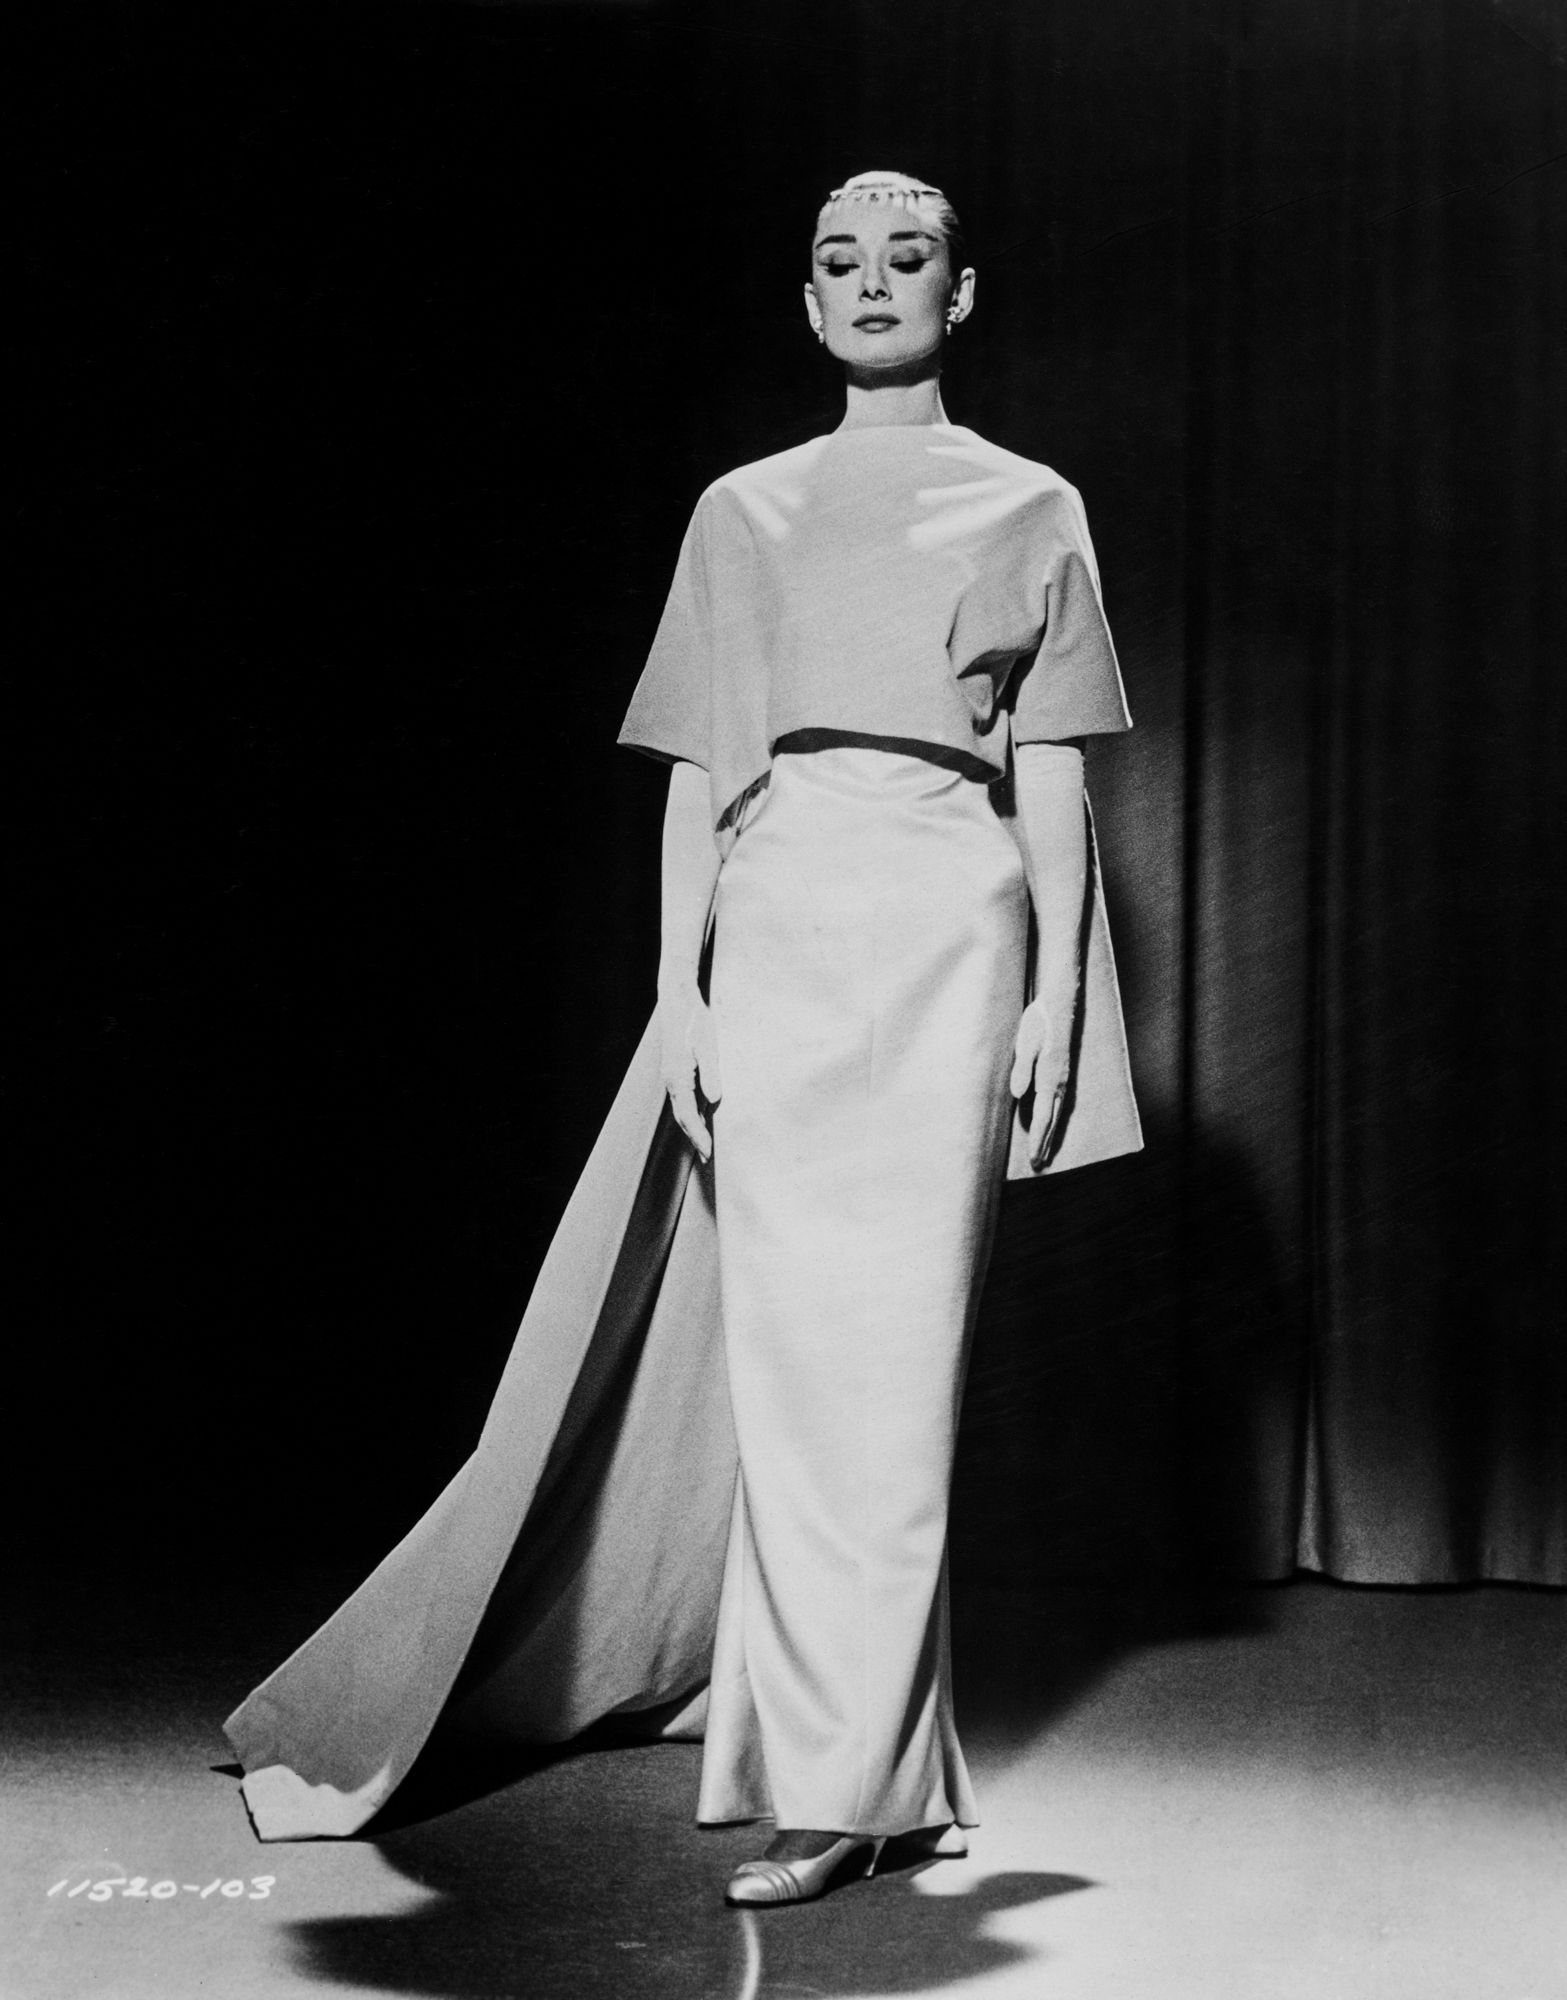 Get Gamine in Gingham Capri Pants, Audrey Hepburn-Style - WSJ